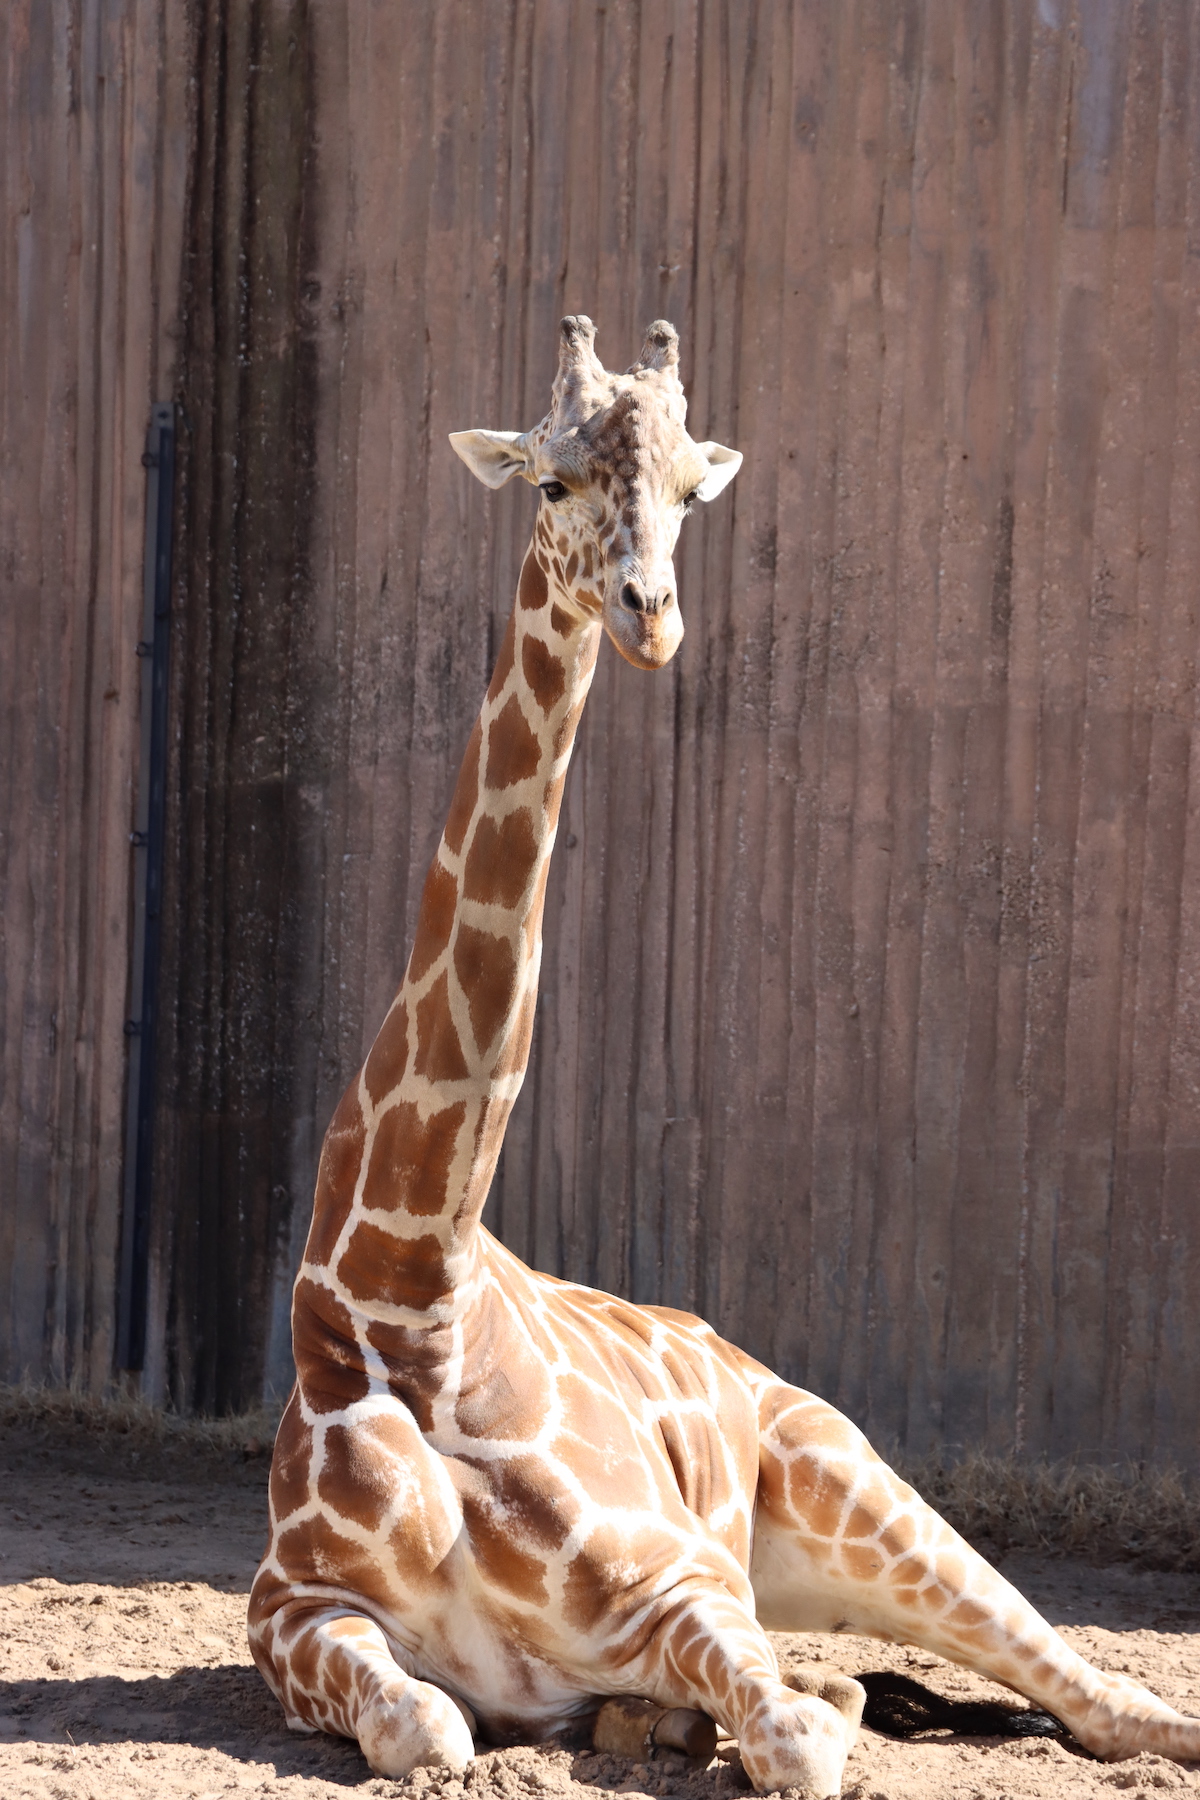 Giraffe at the Sedgwick County Zoo in Wichita, Kansas